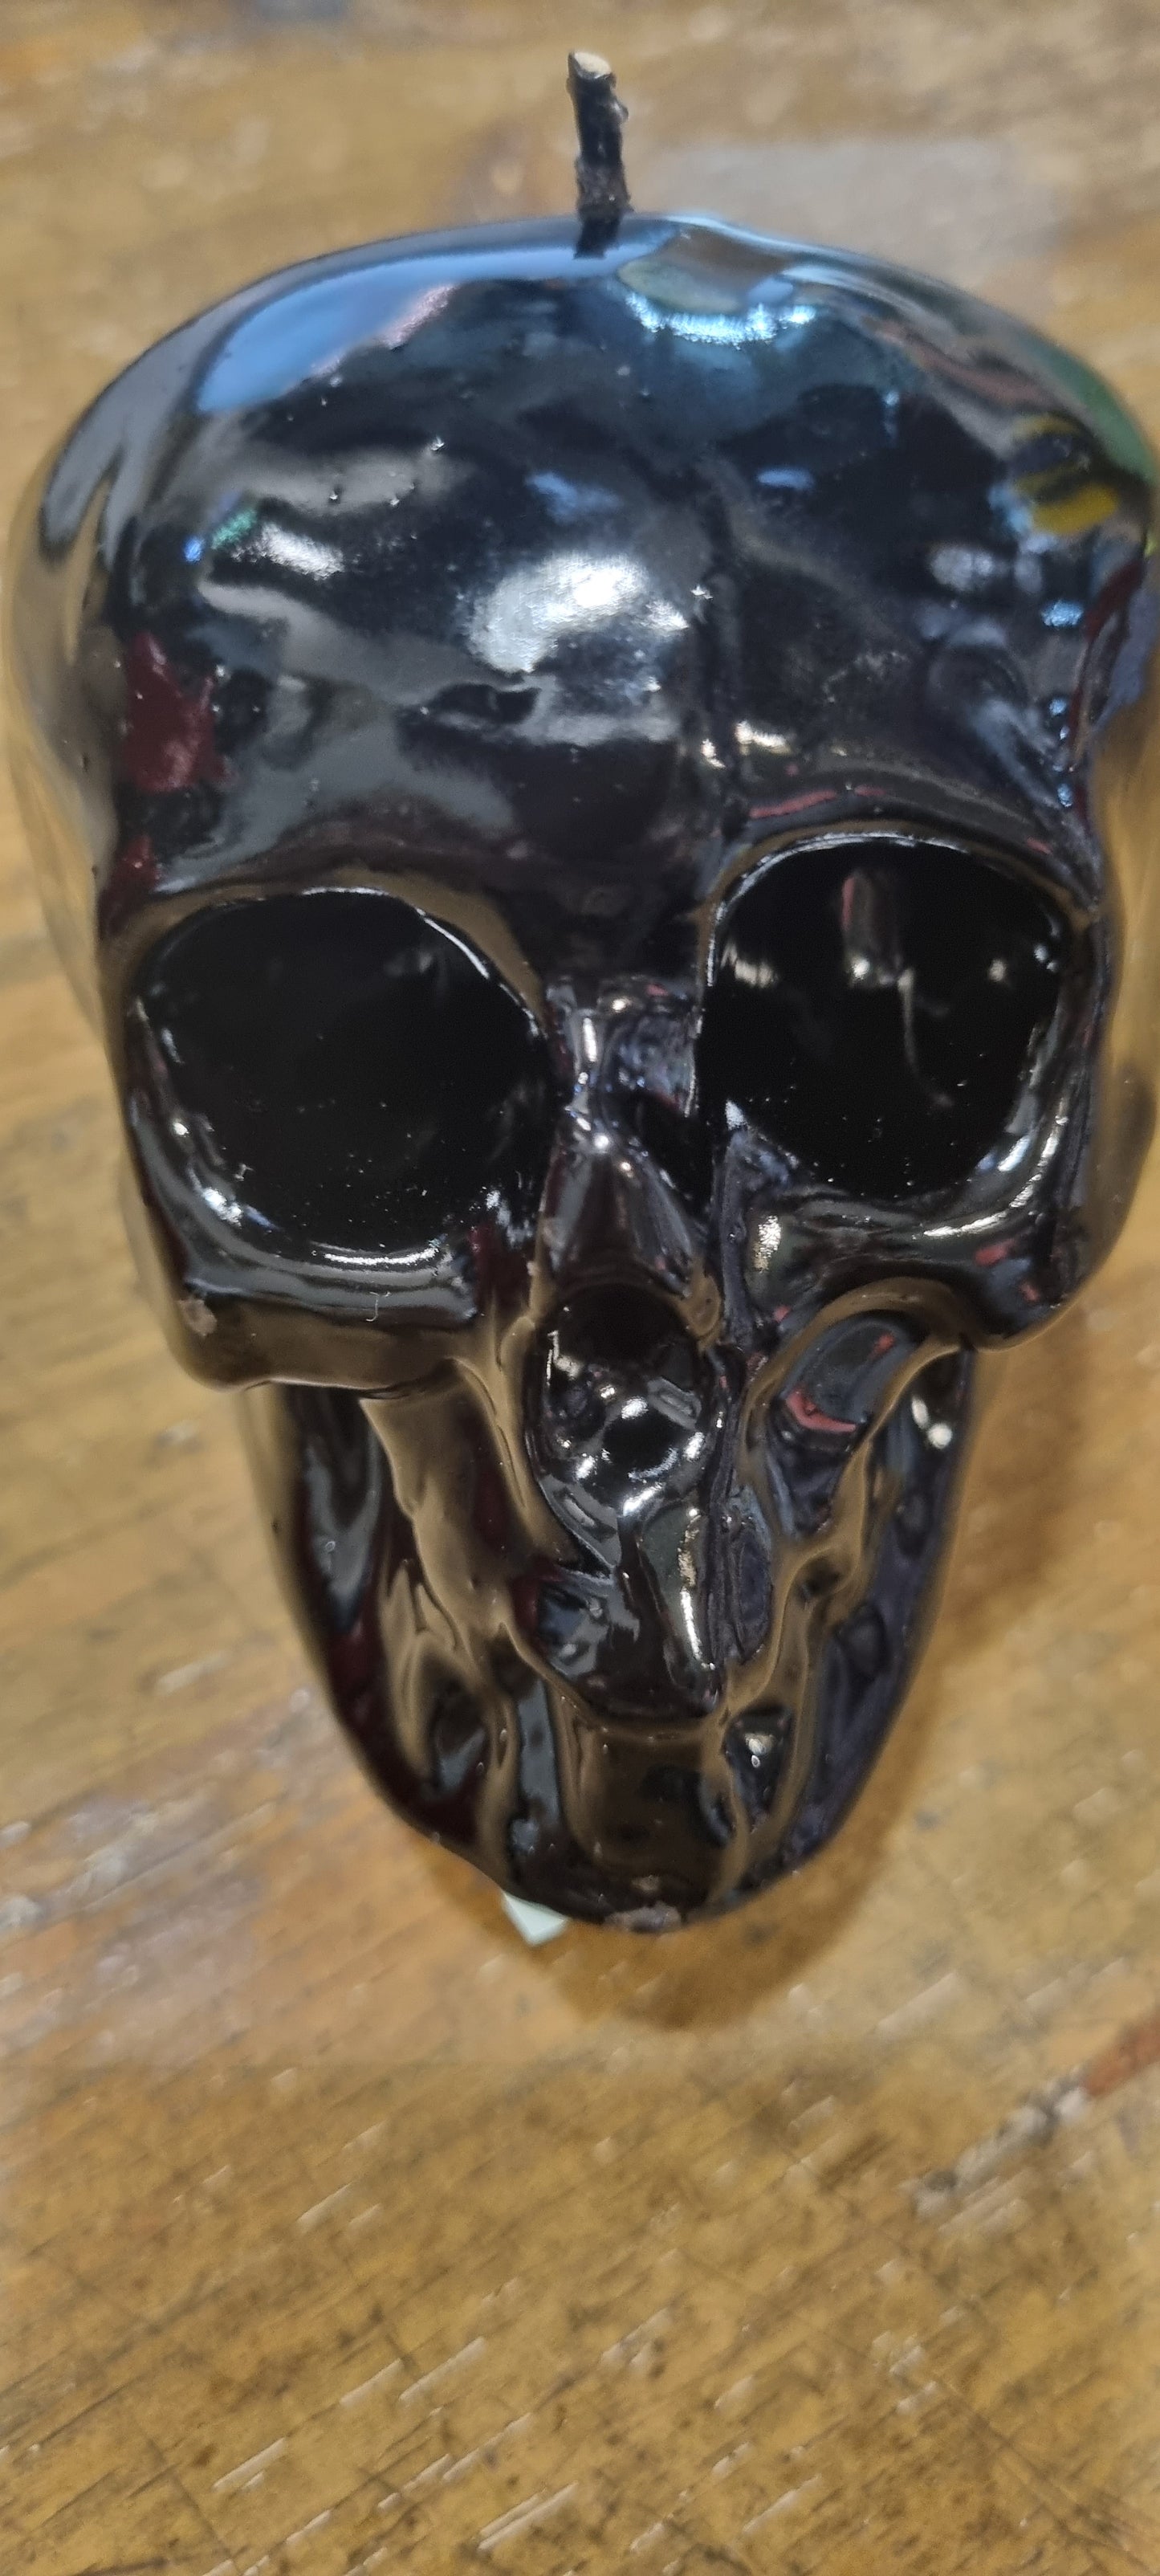 Nimbin Candles Skull Candle, Small Black Skull Or Large Black Skull